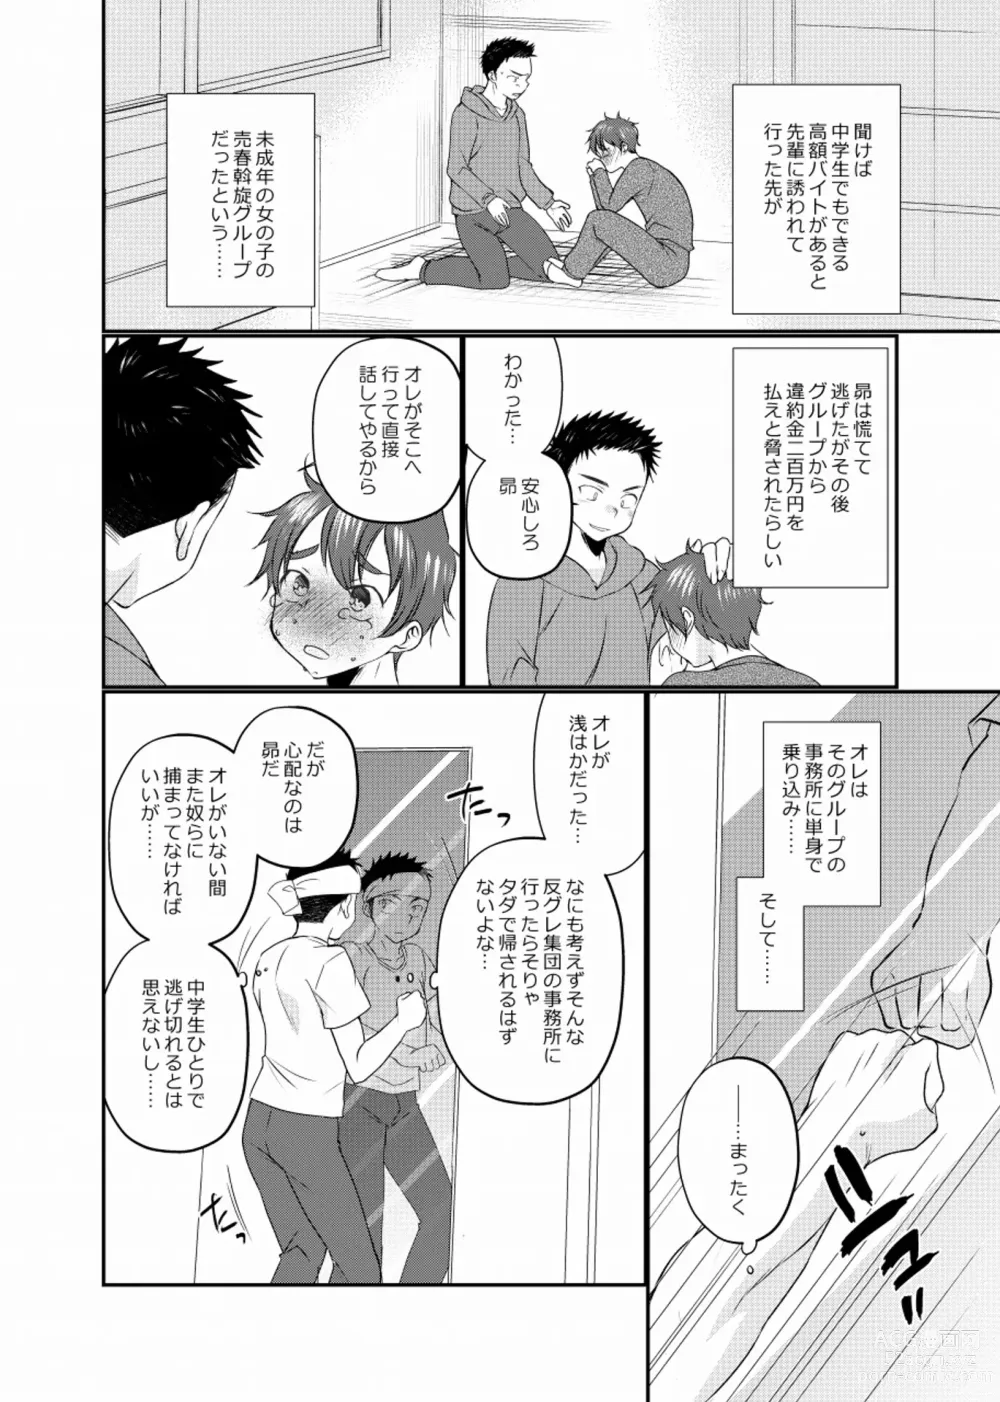 Page 7 of doujinshi 地下労働格闘少年